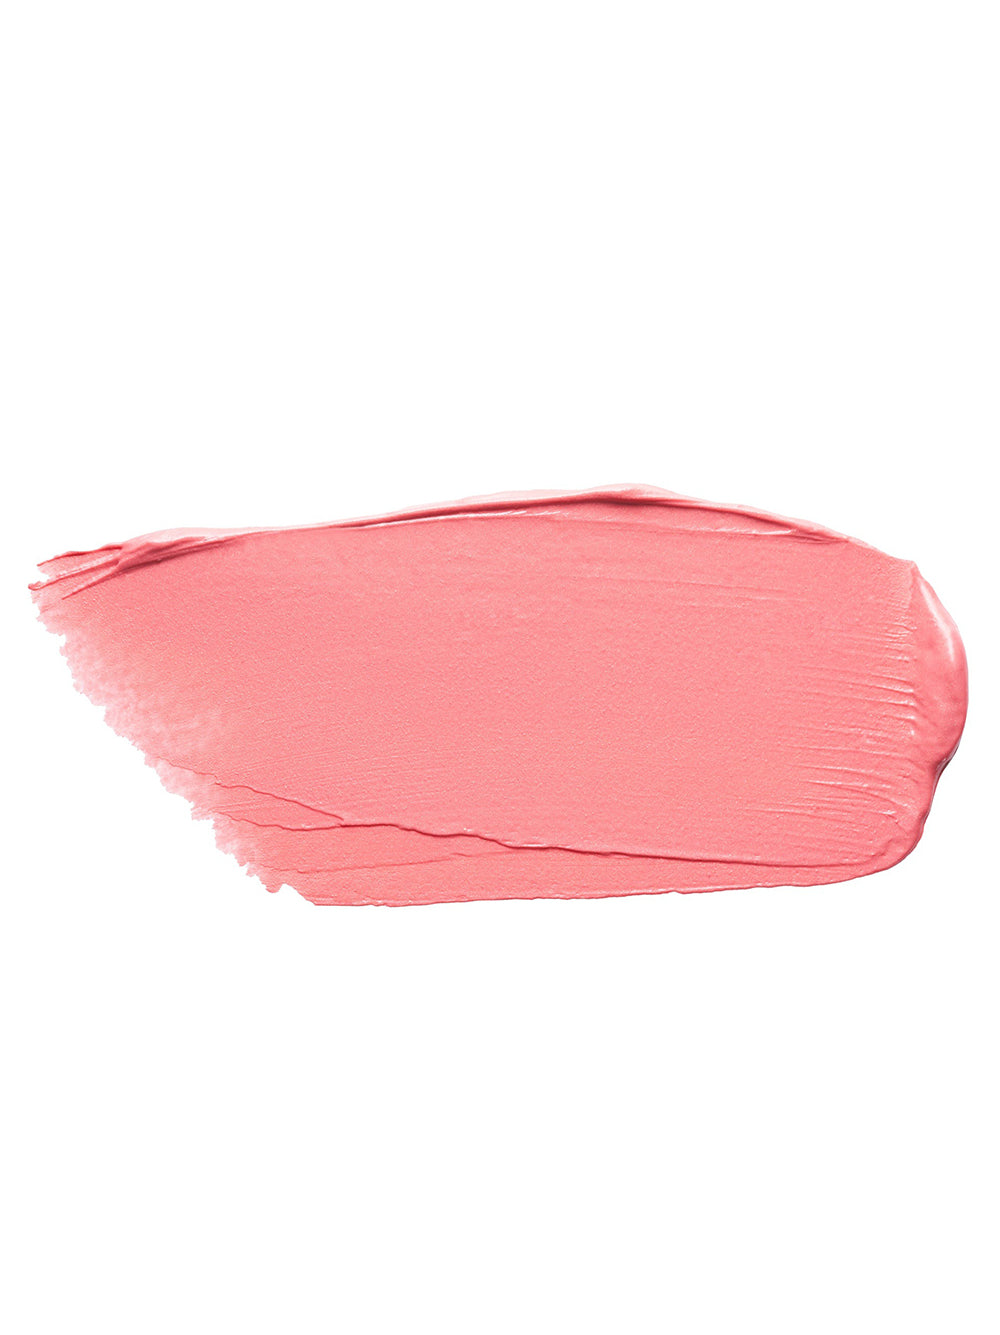 Trish McEvoy Cream Blush (More Colors)